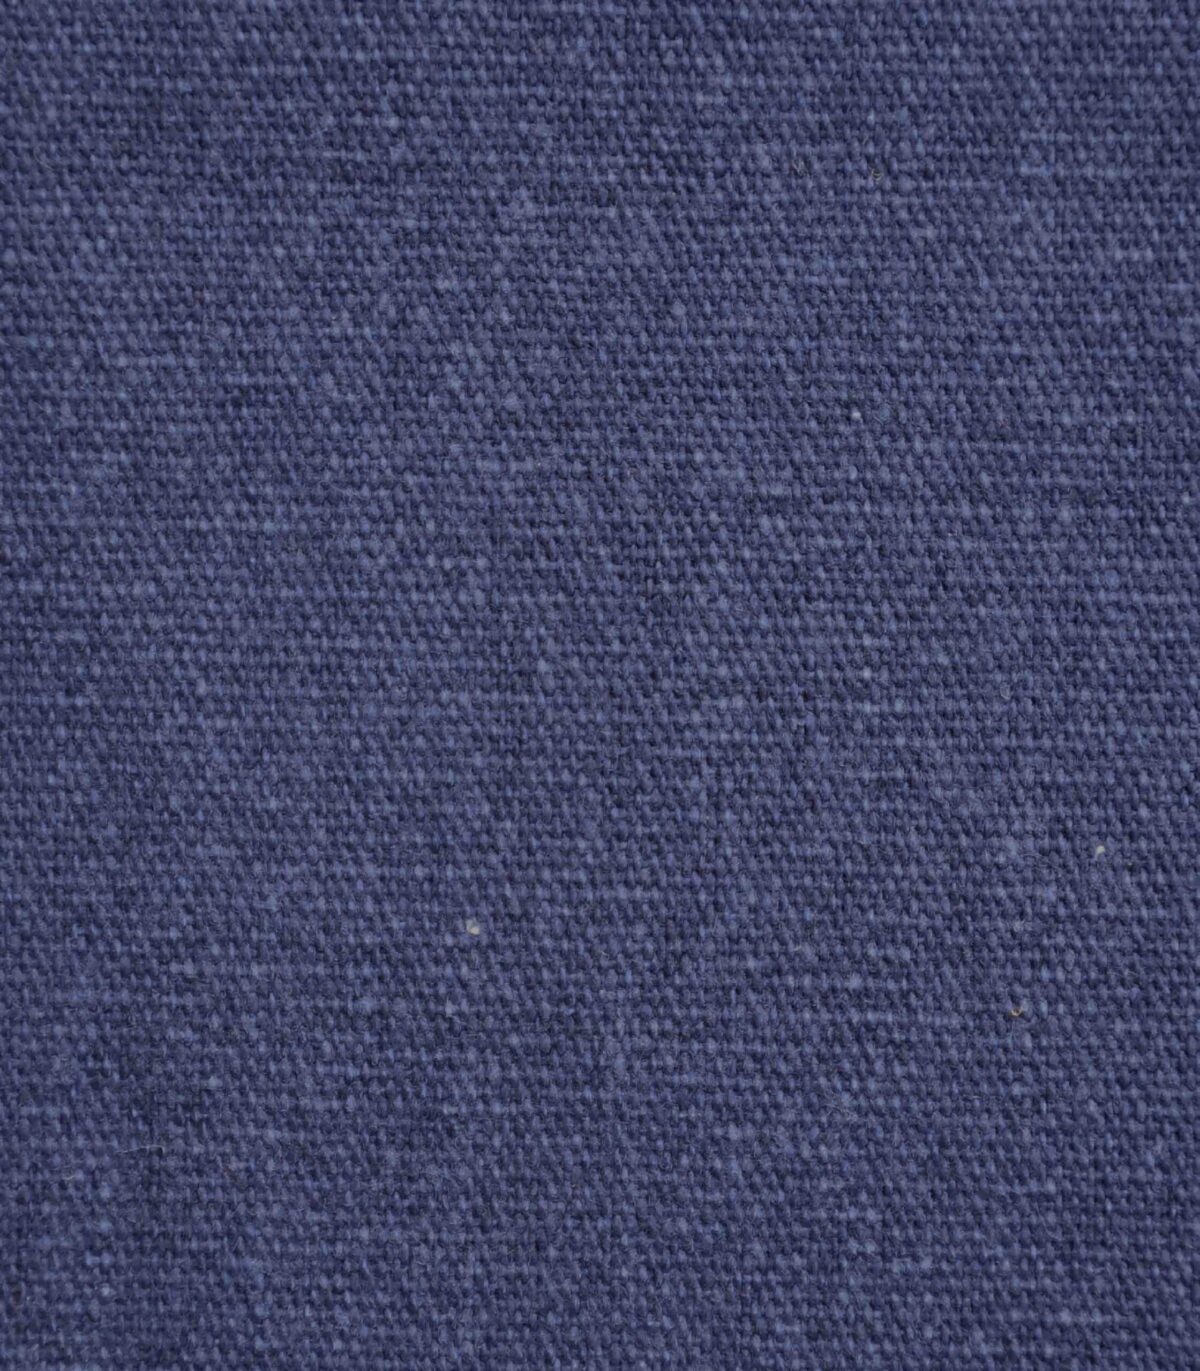 Cotton Dark Blue Indigo Denim Fabric